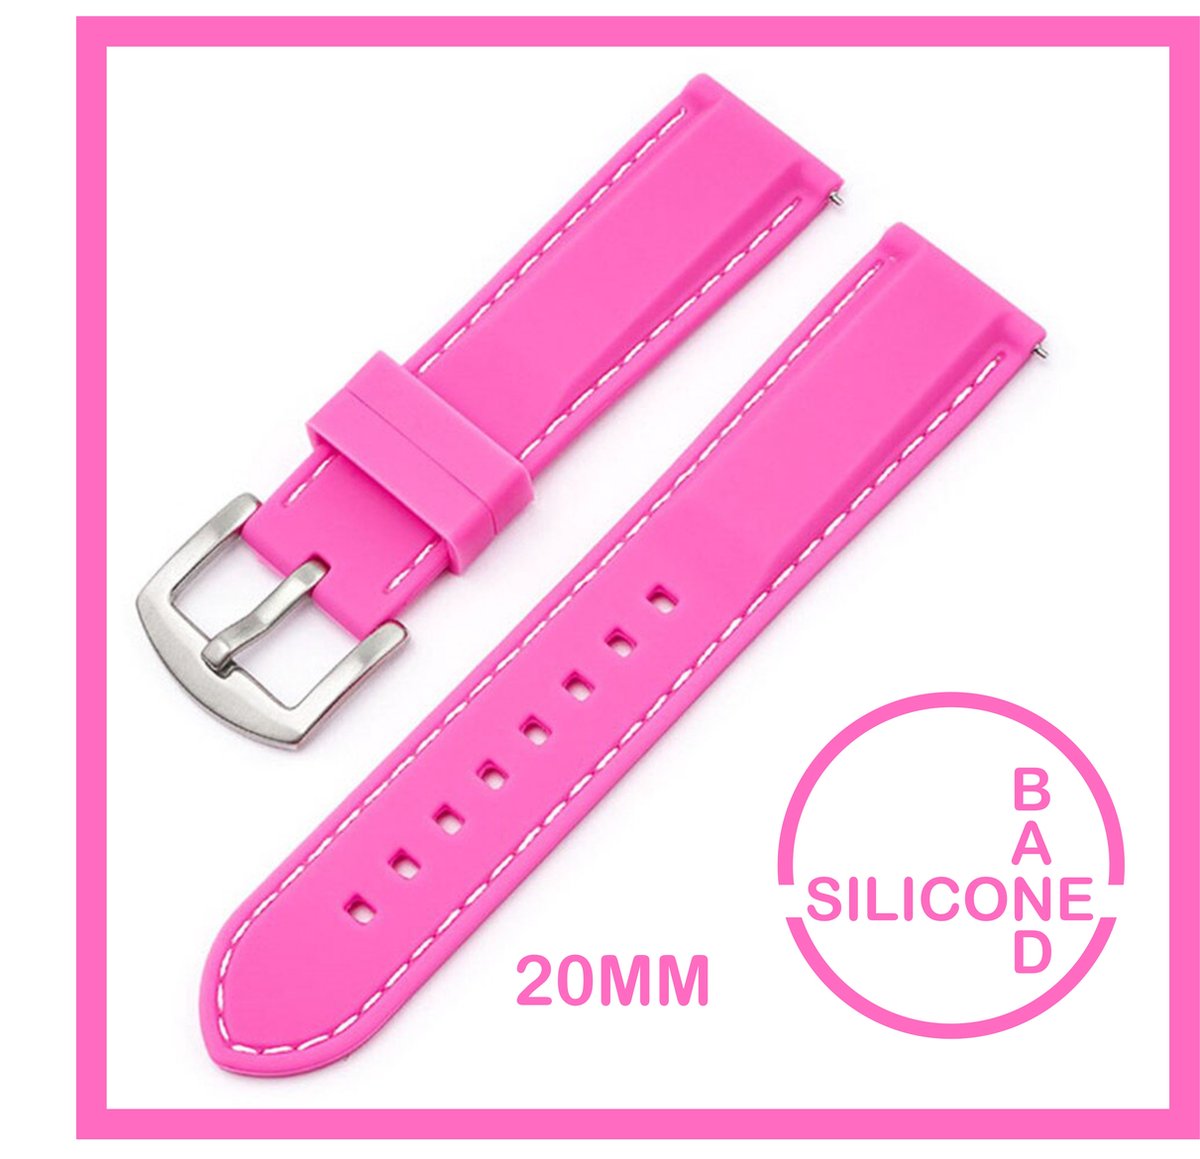 20mm Rubber Siliconen horlogeband Roze met witte stiksels passend op o.a Casio Seiko Citizen en alle andere merken - 20 mm Bandje - Horlogebandje horlogeband